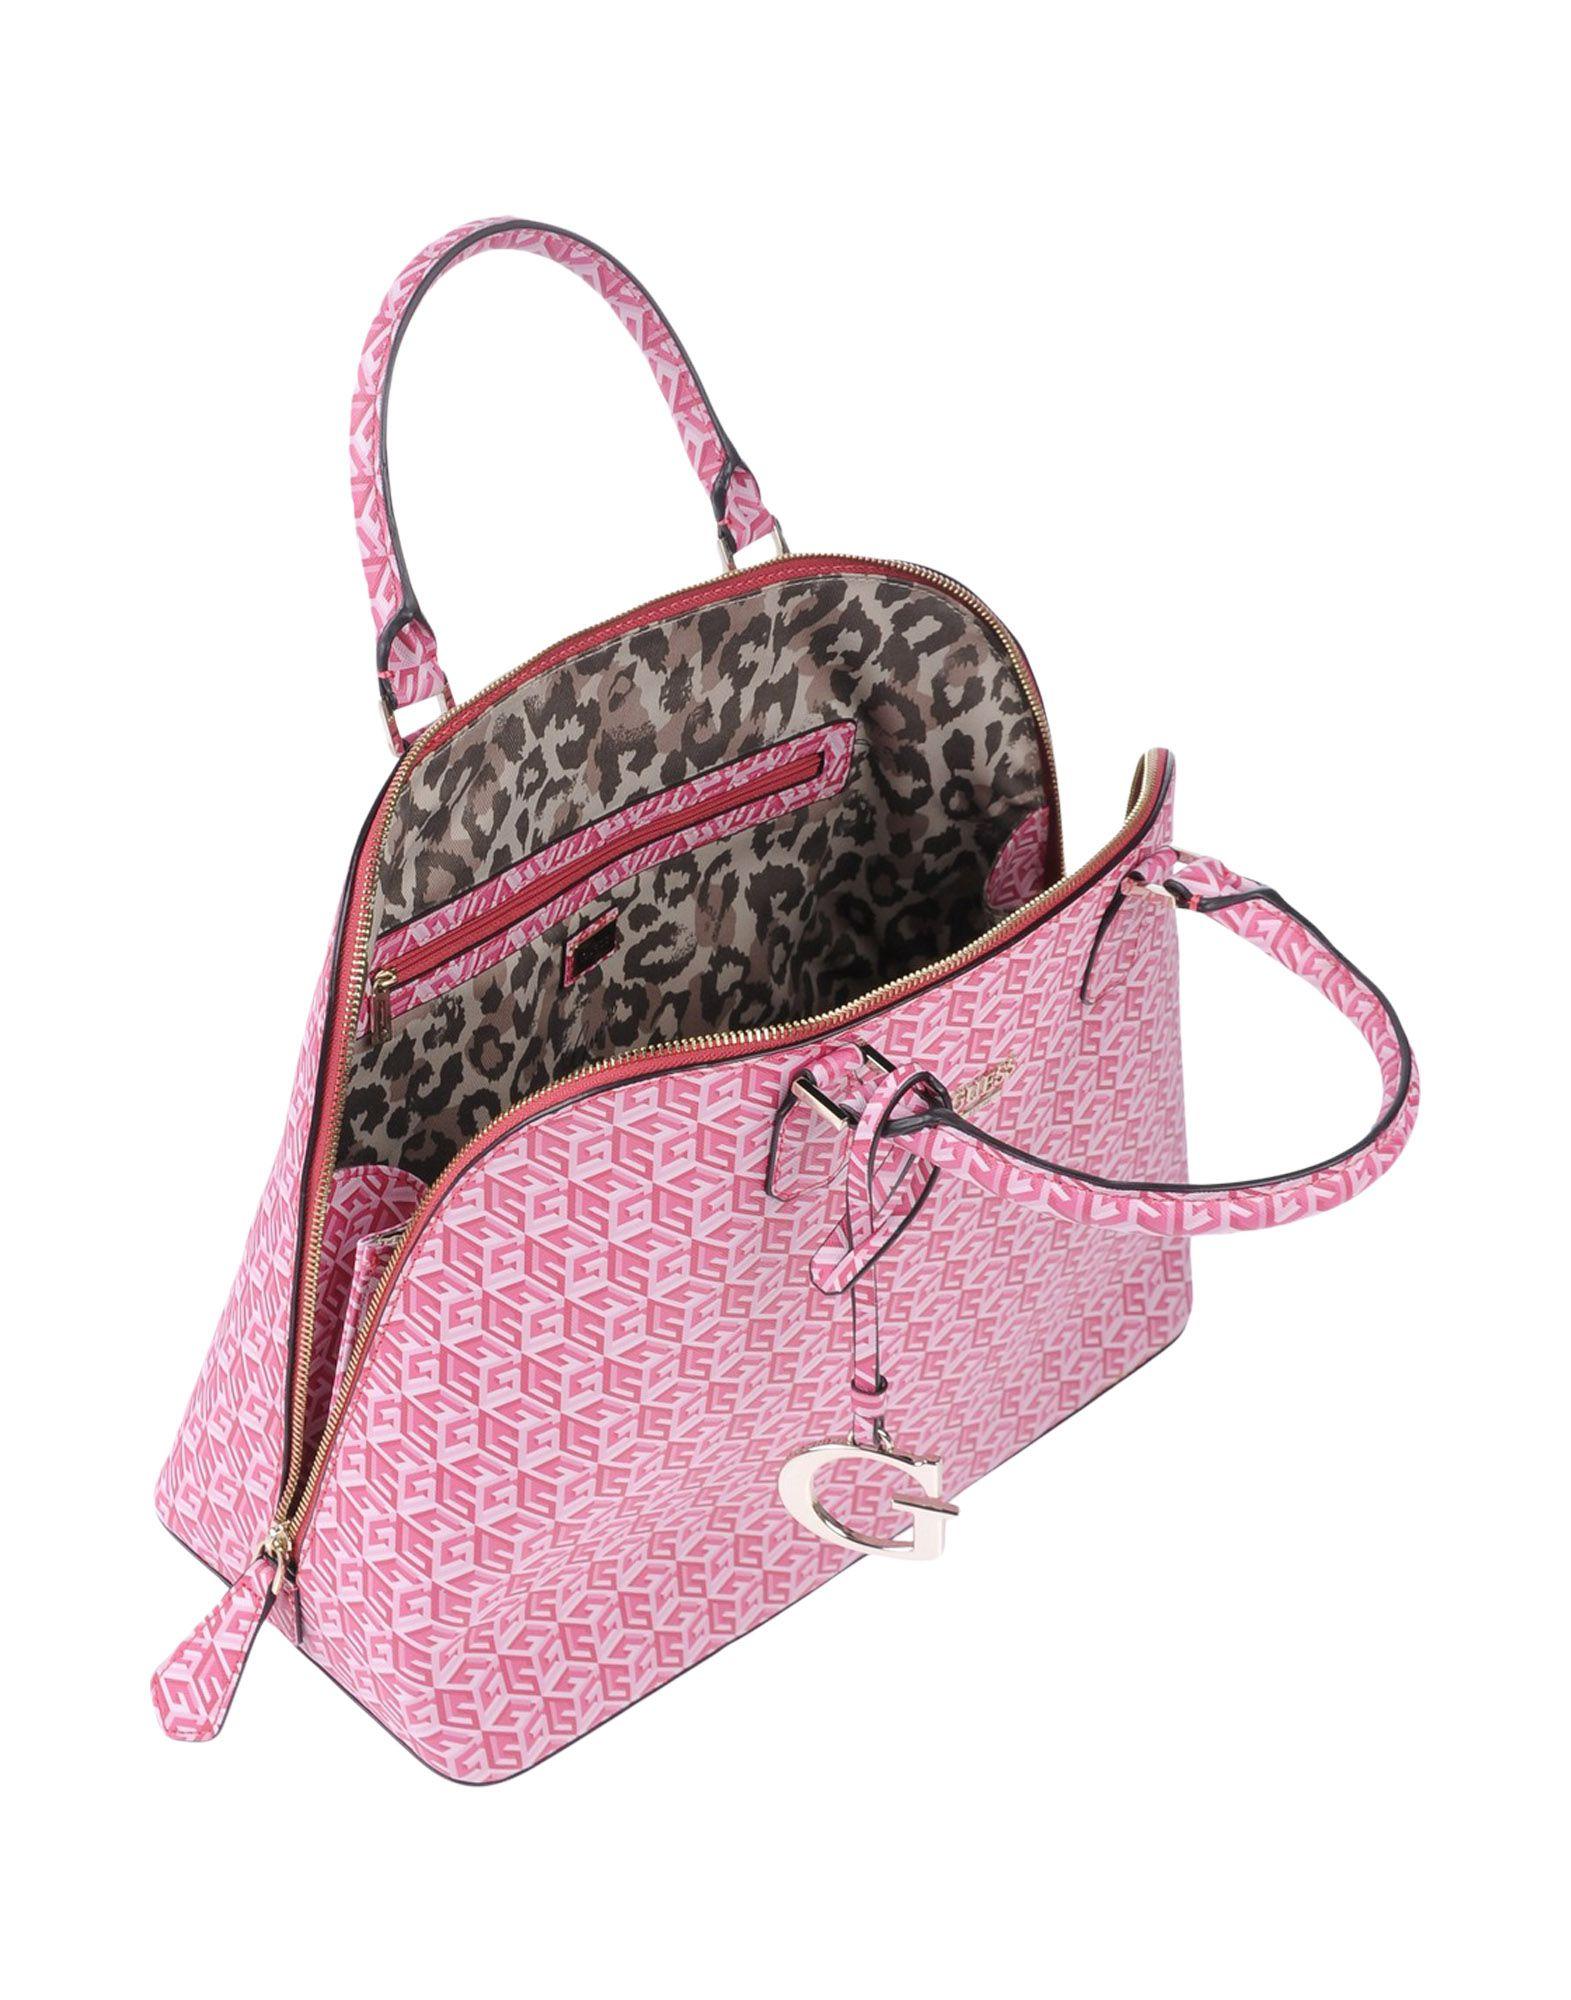 Lyst - Guess Handbag in Pink